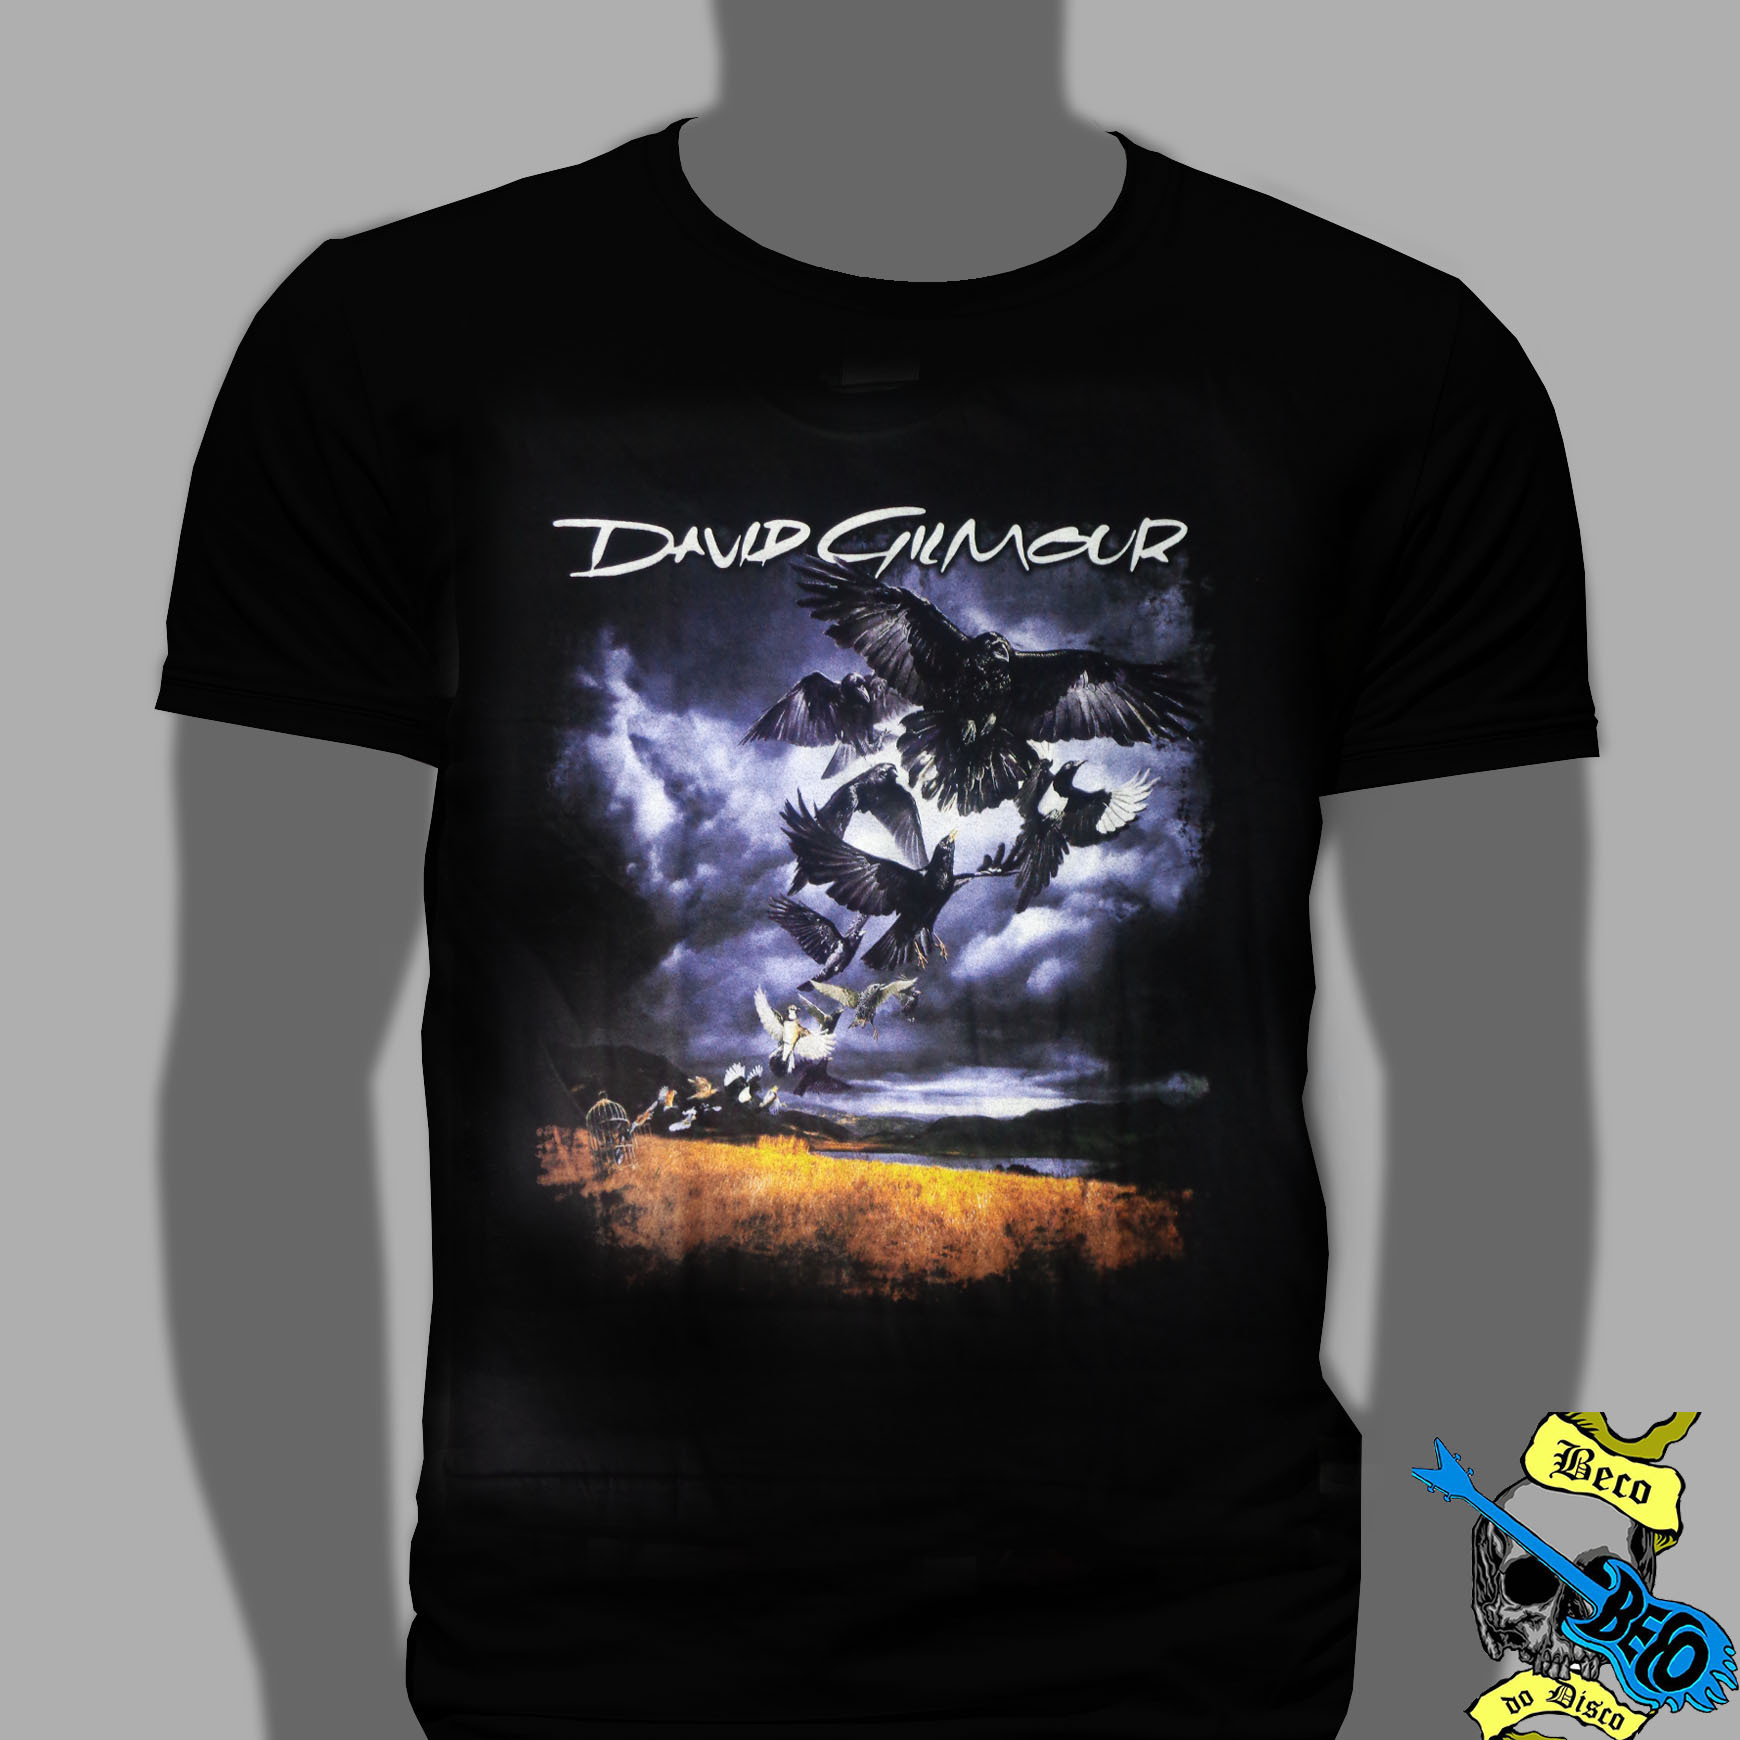 CAMISETA - David Gilmour - ts1134